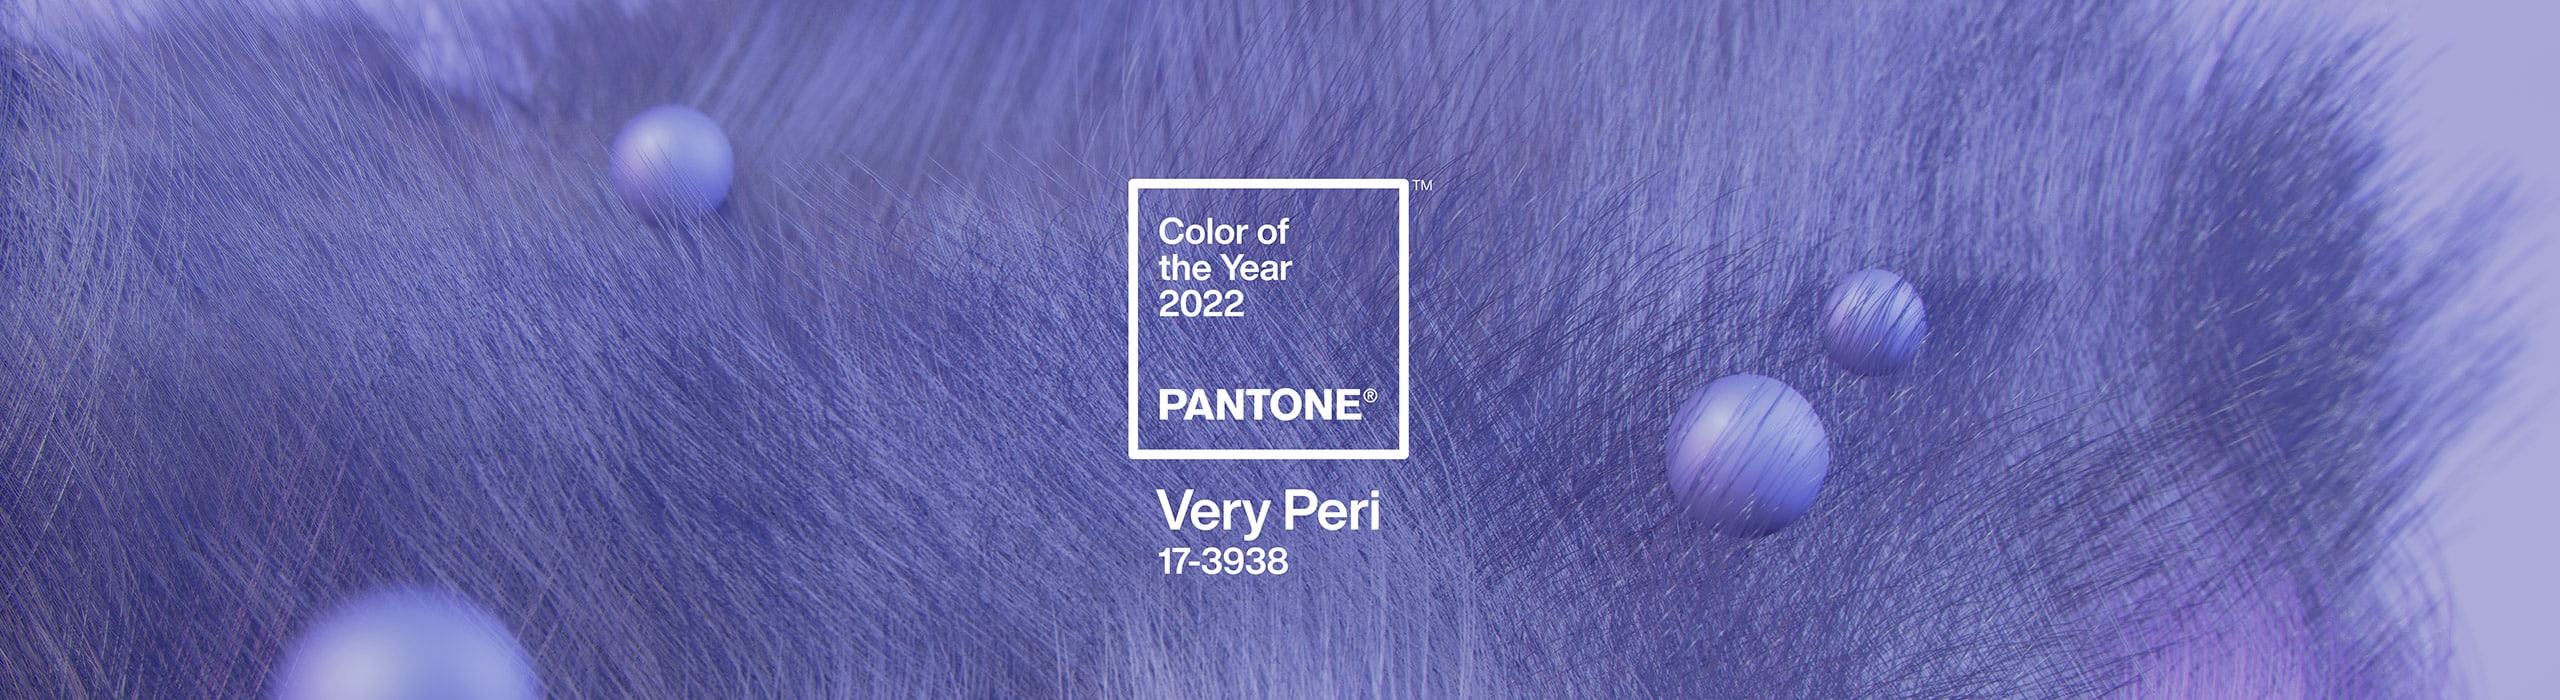 pantone color of the year 2022 very peri 